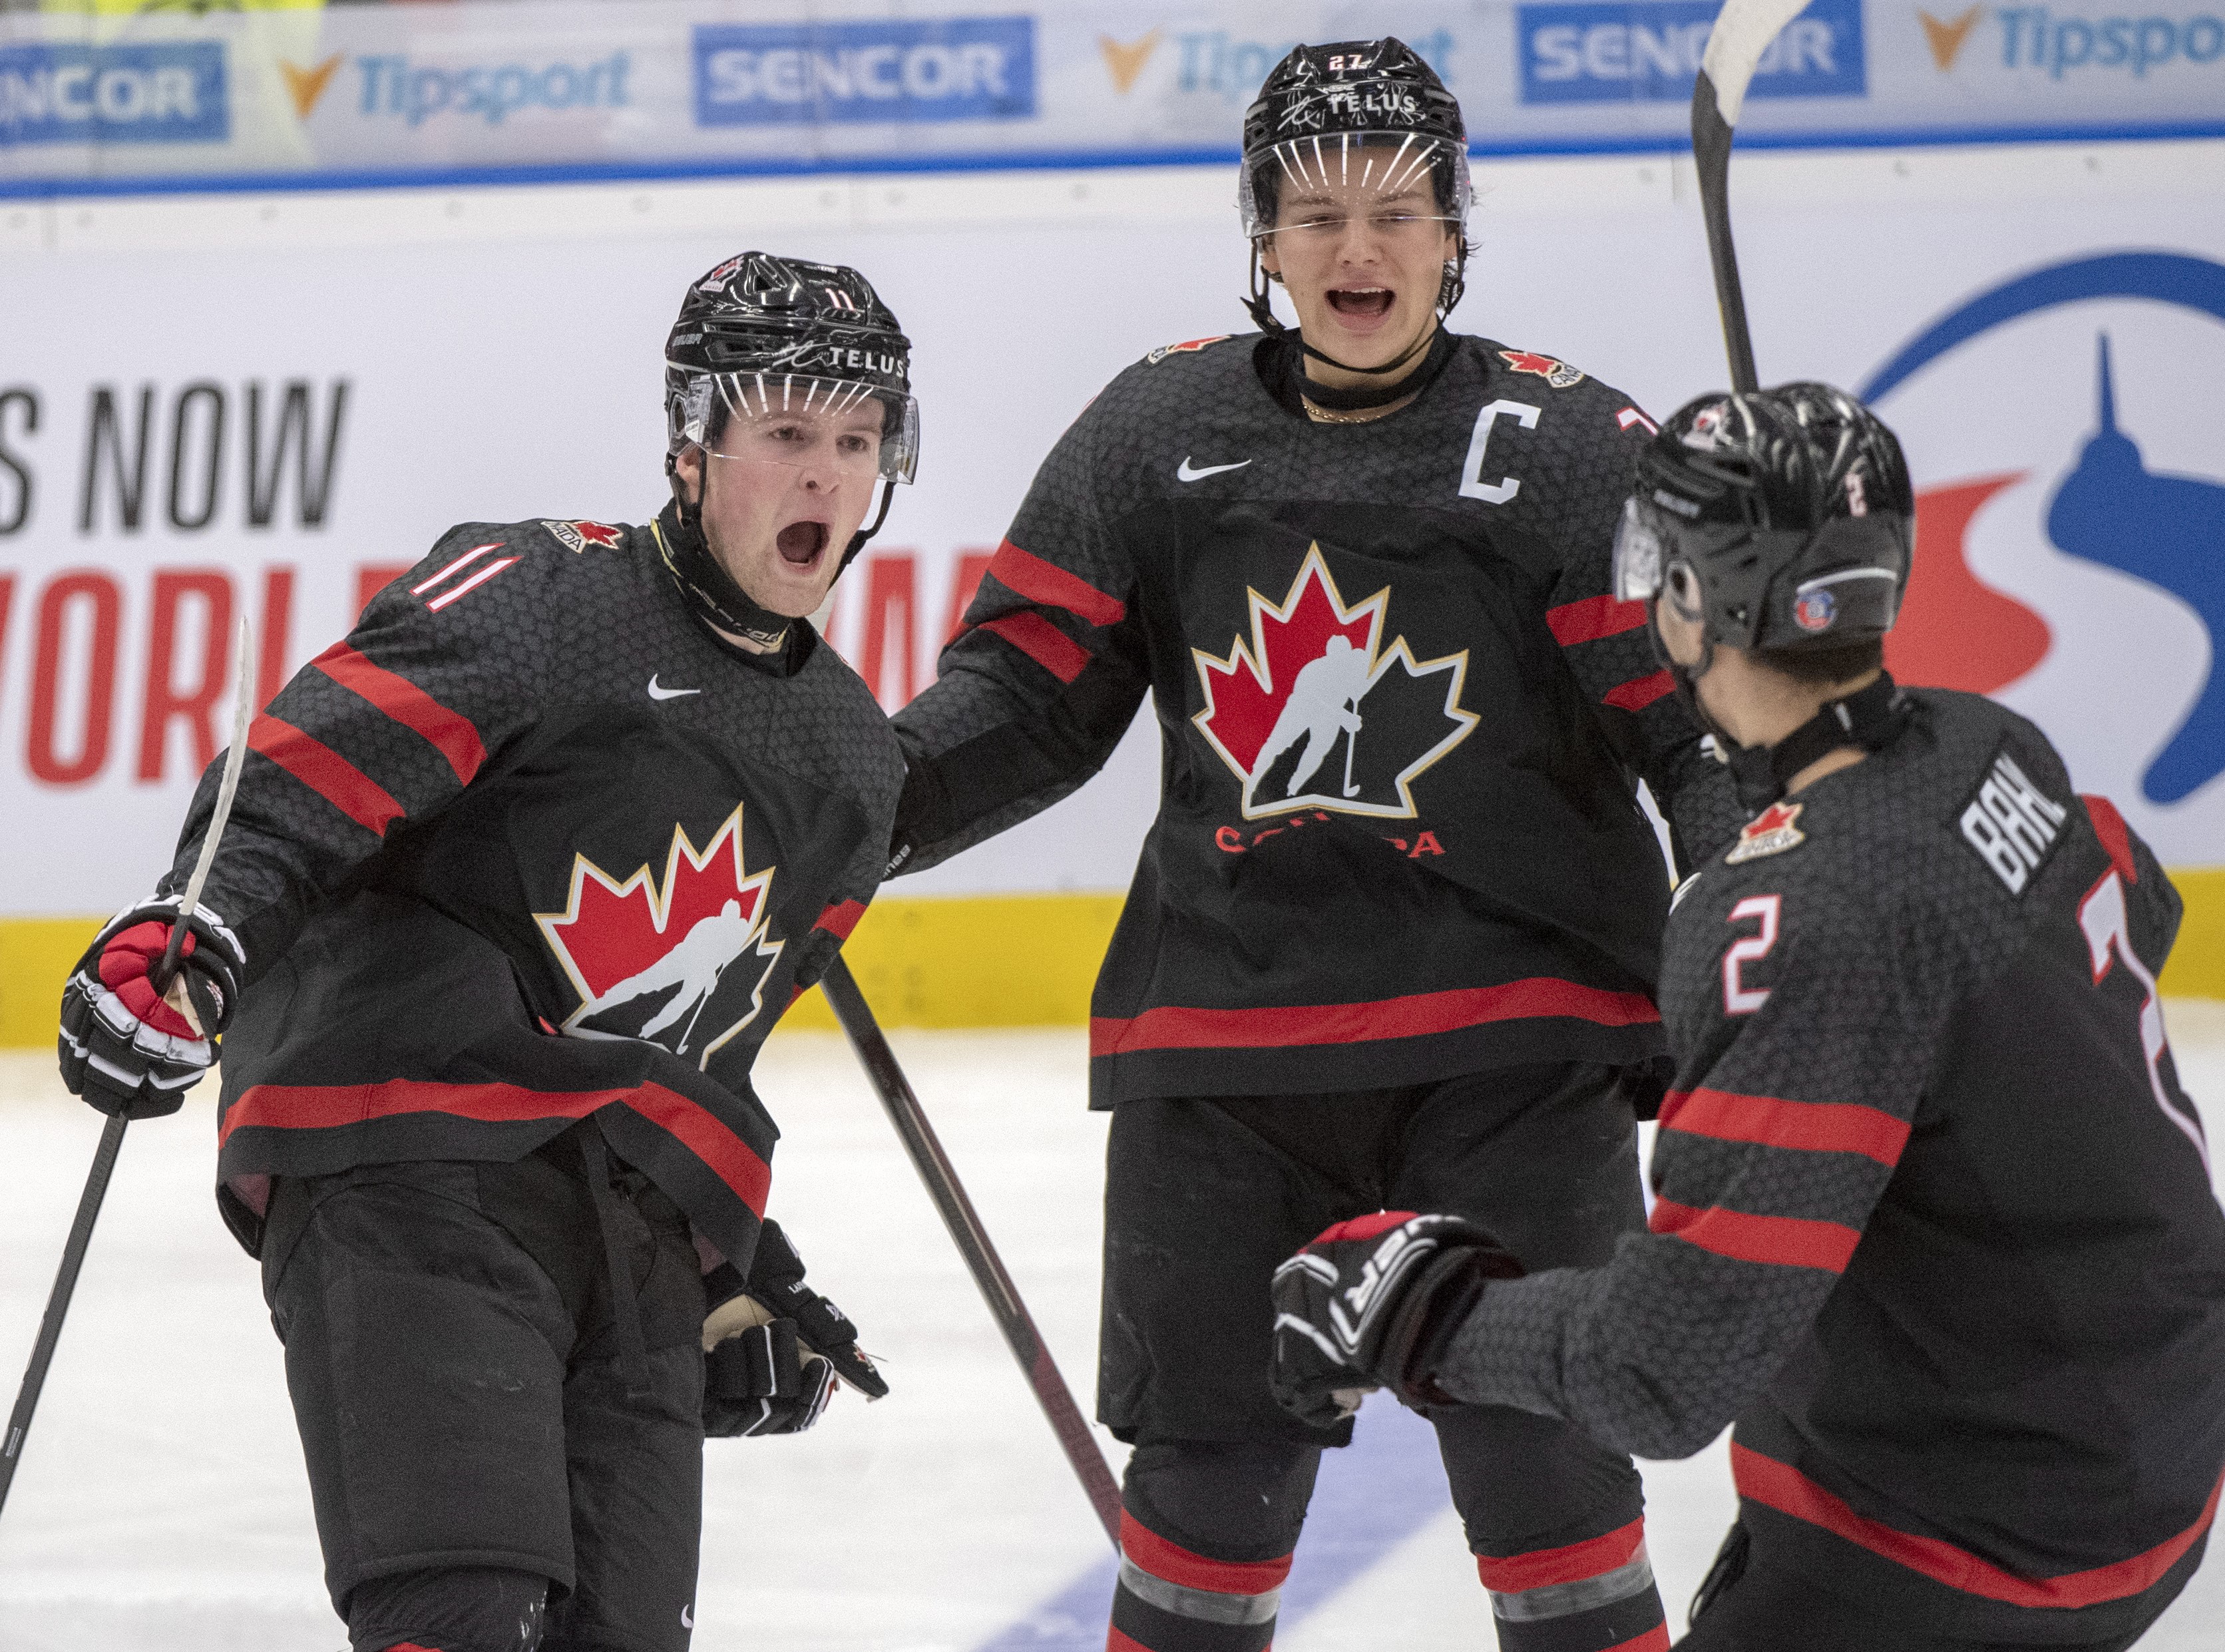 Jamie Drysdale Team Canada Canada Finalizes 23 Man World Juniors